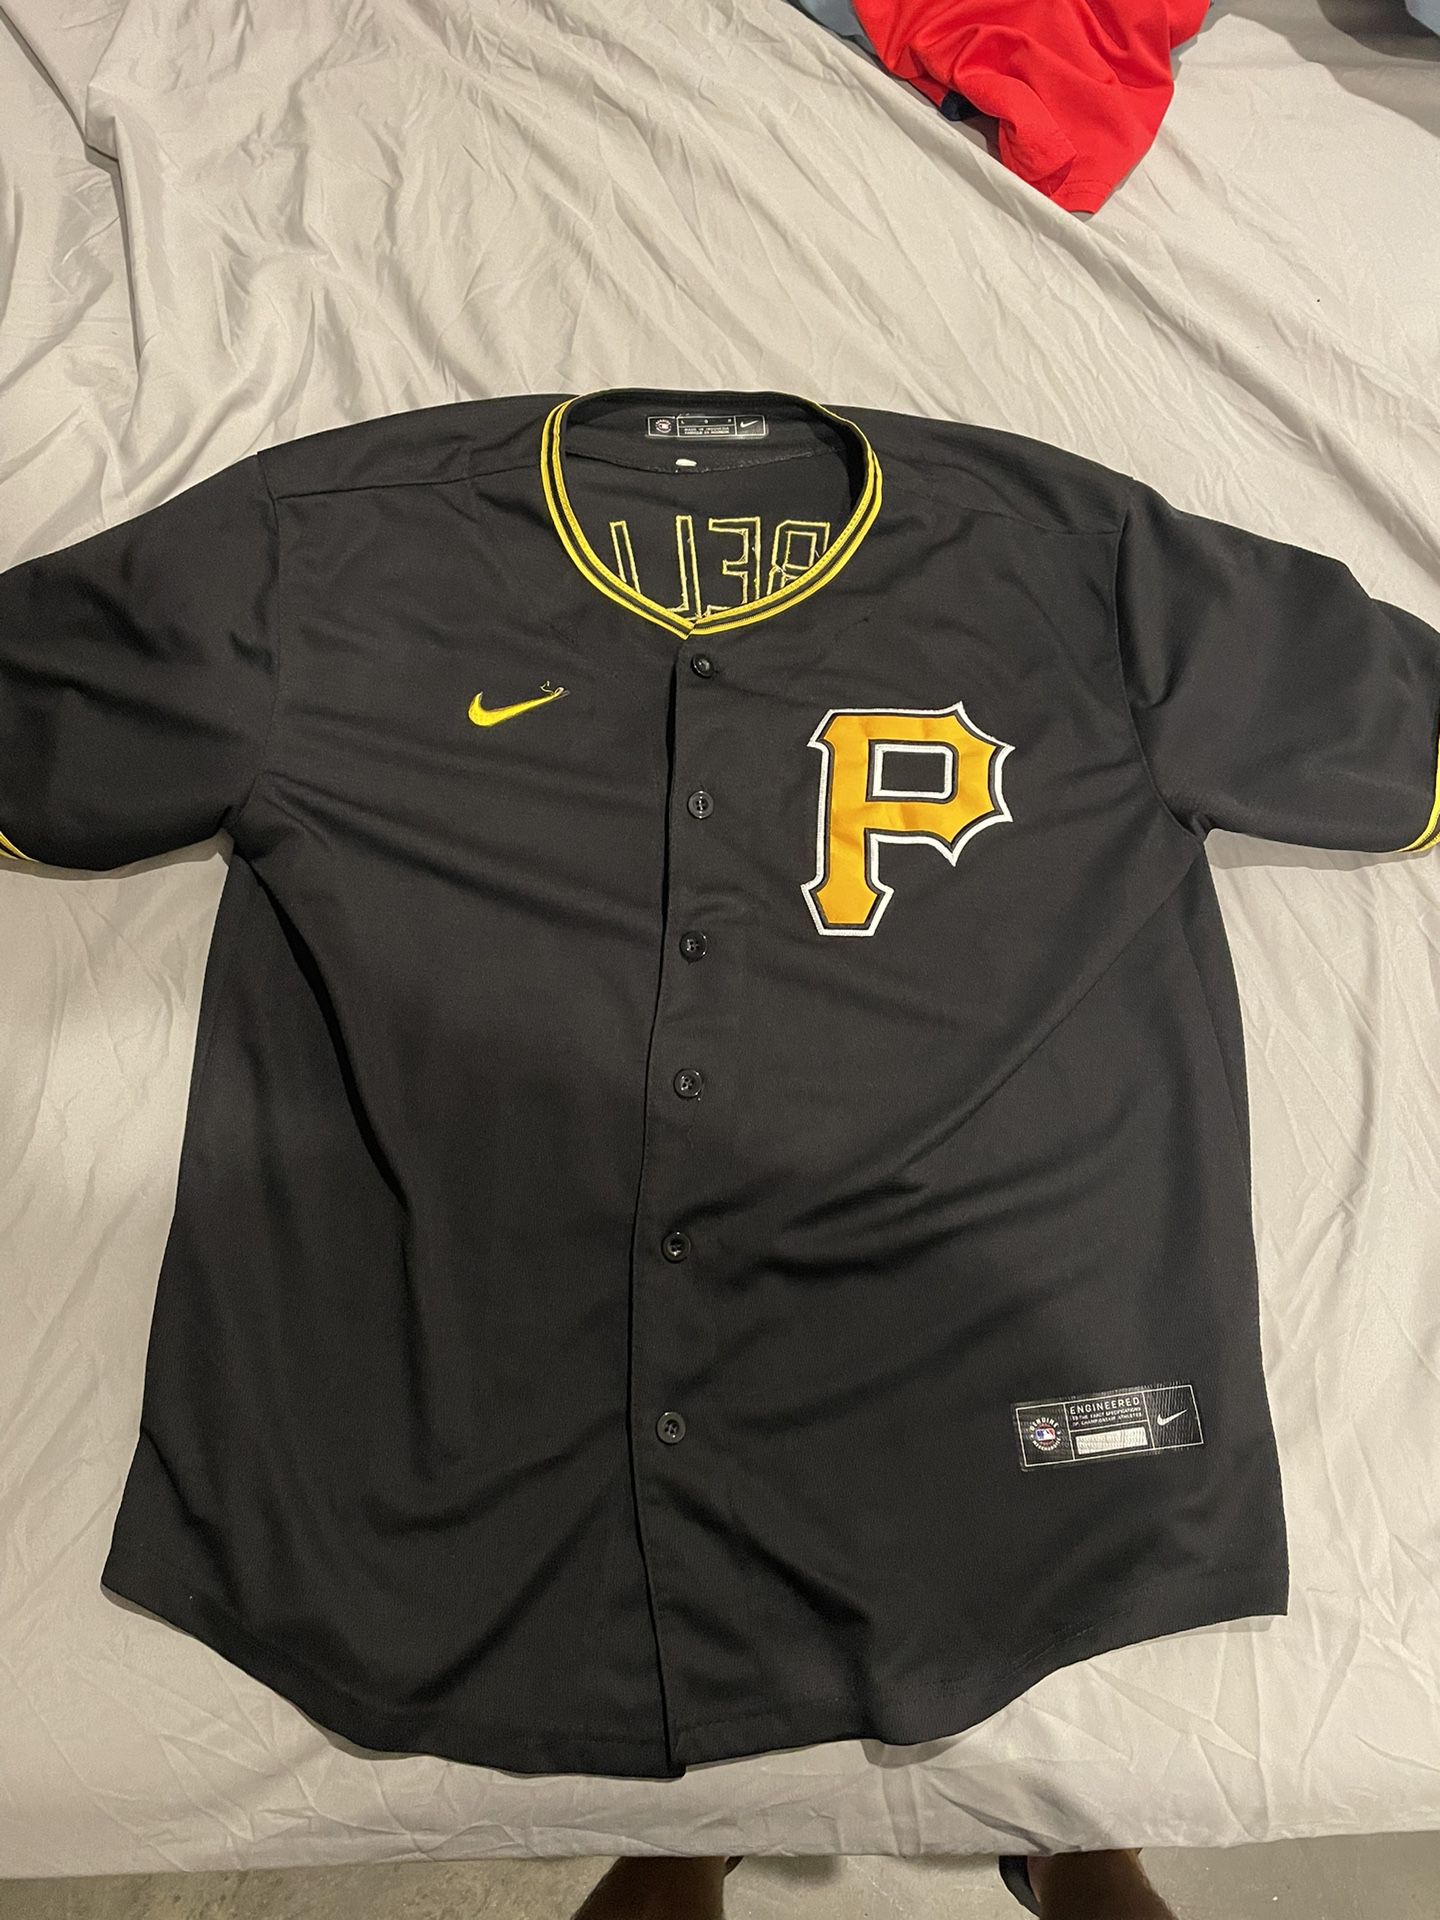 Pittsburgh Pirates Jersey 